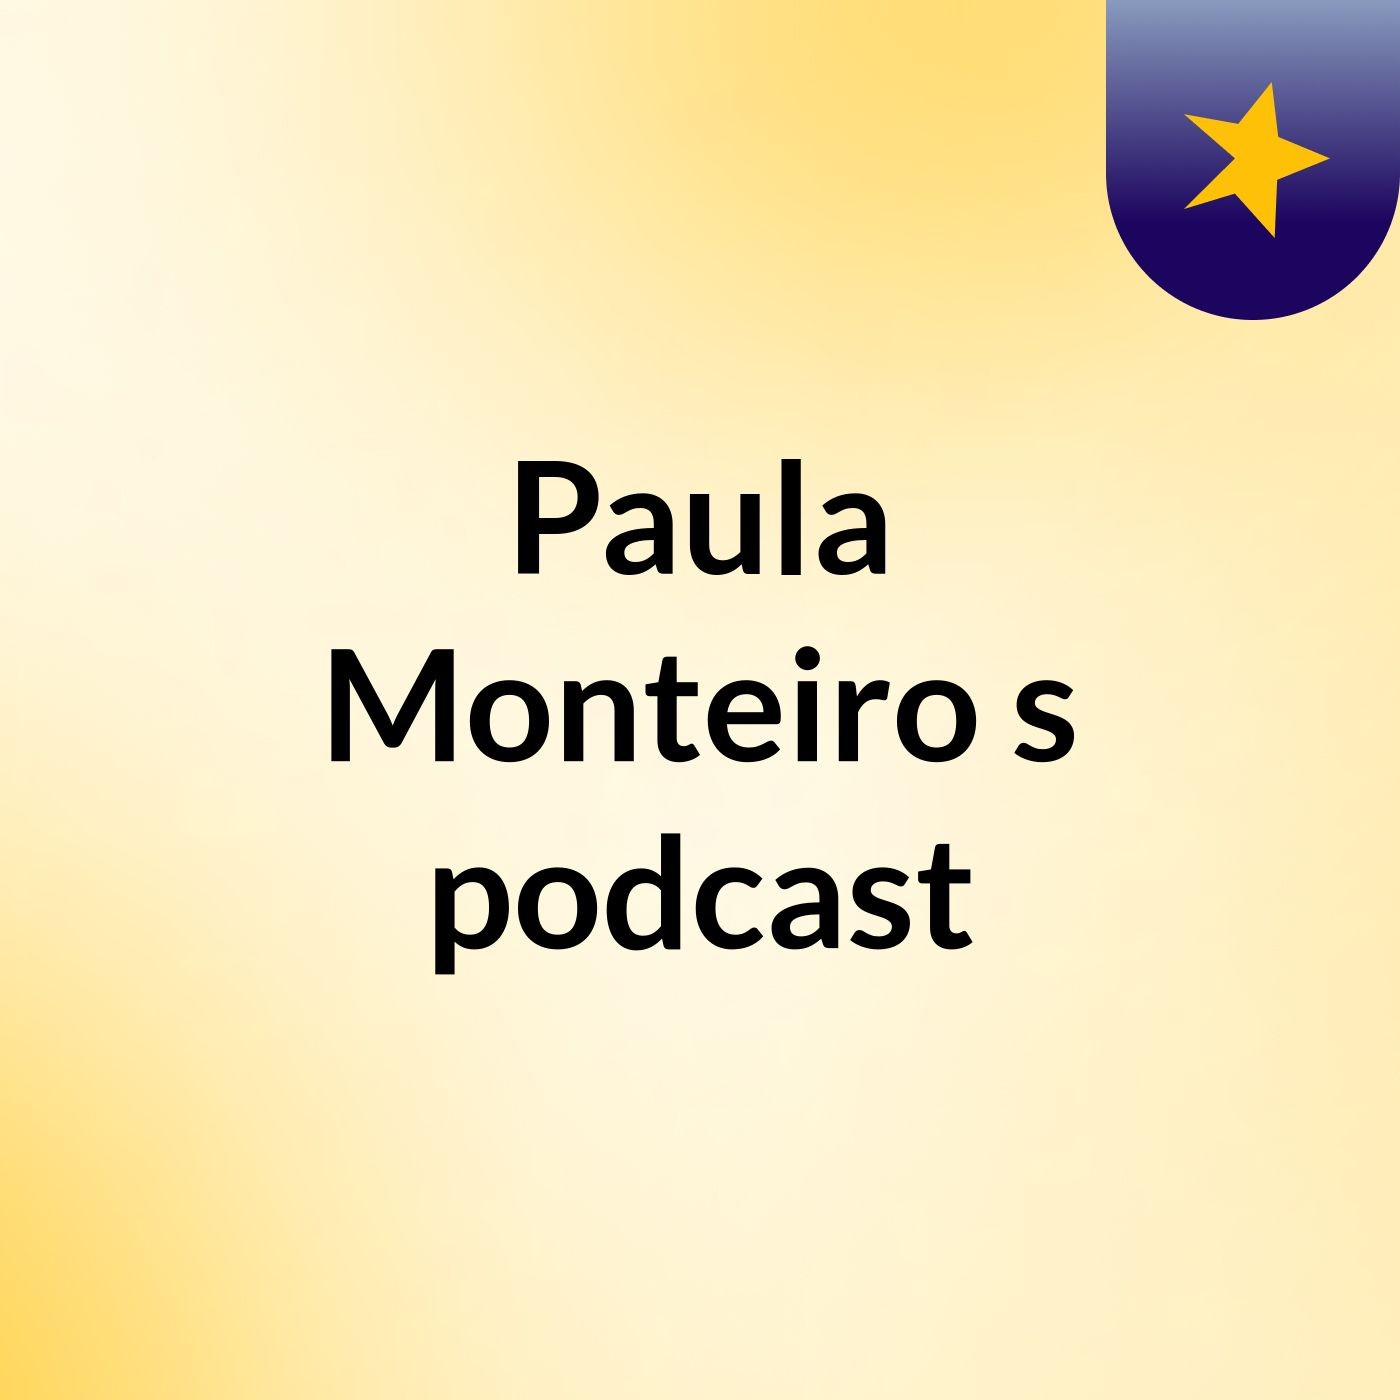 Paula Monteiro's podcast